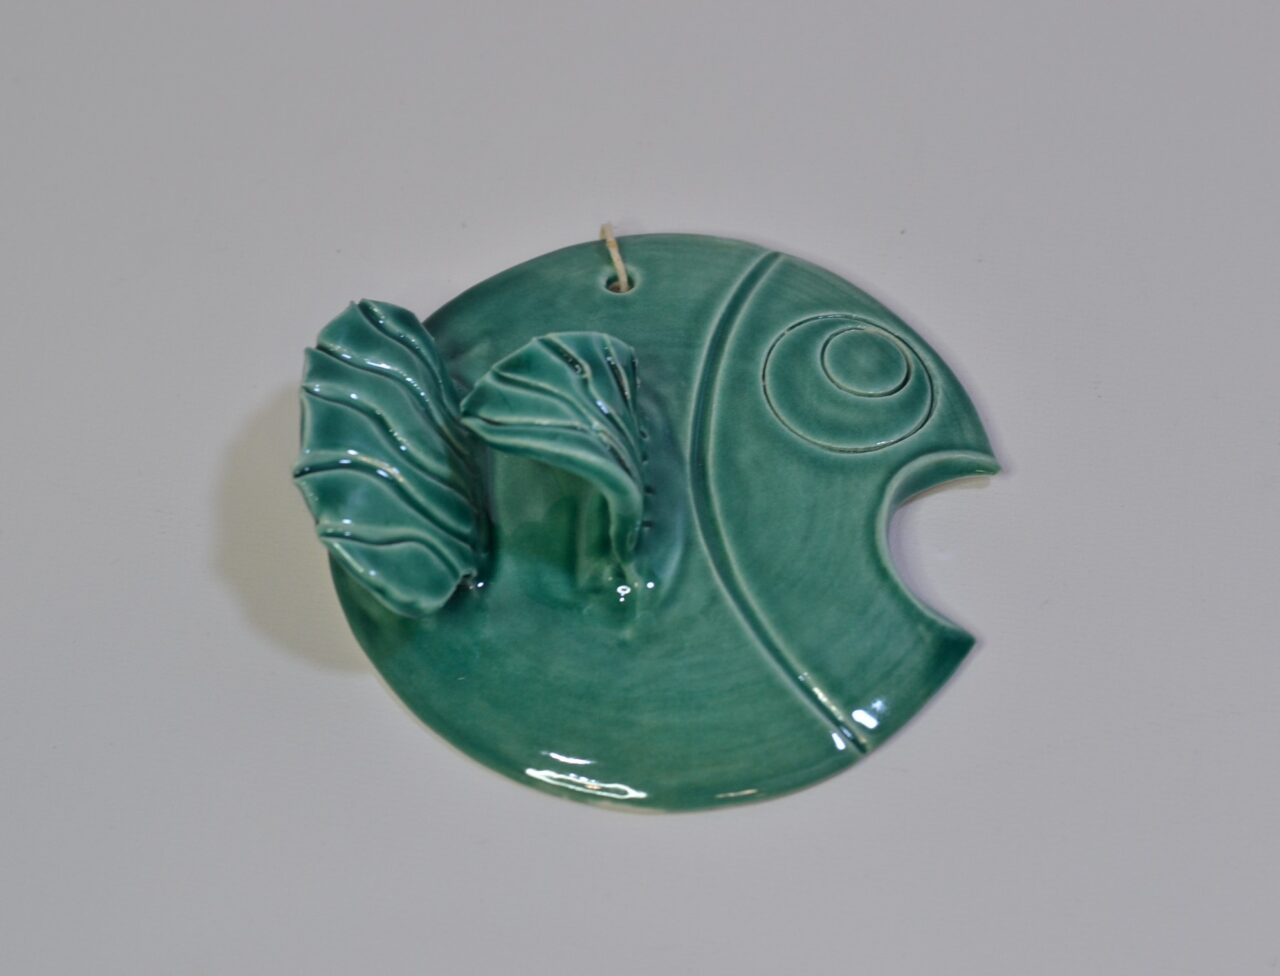 Pesce in ceramica da appendere verde acqua